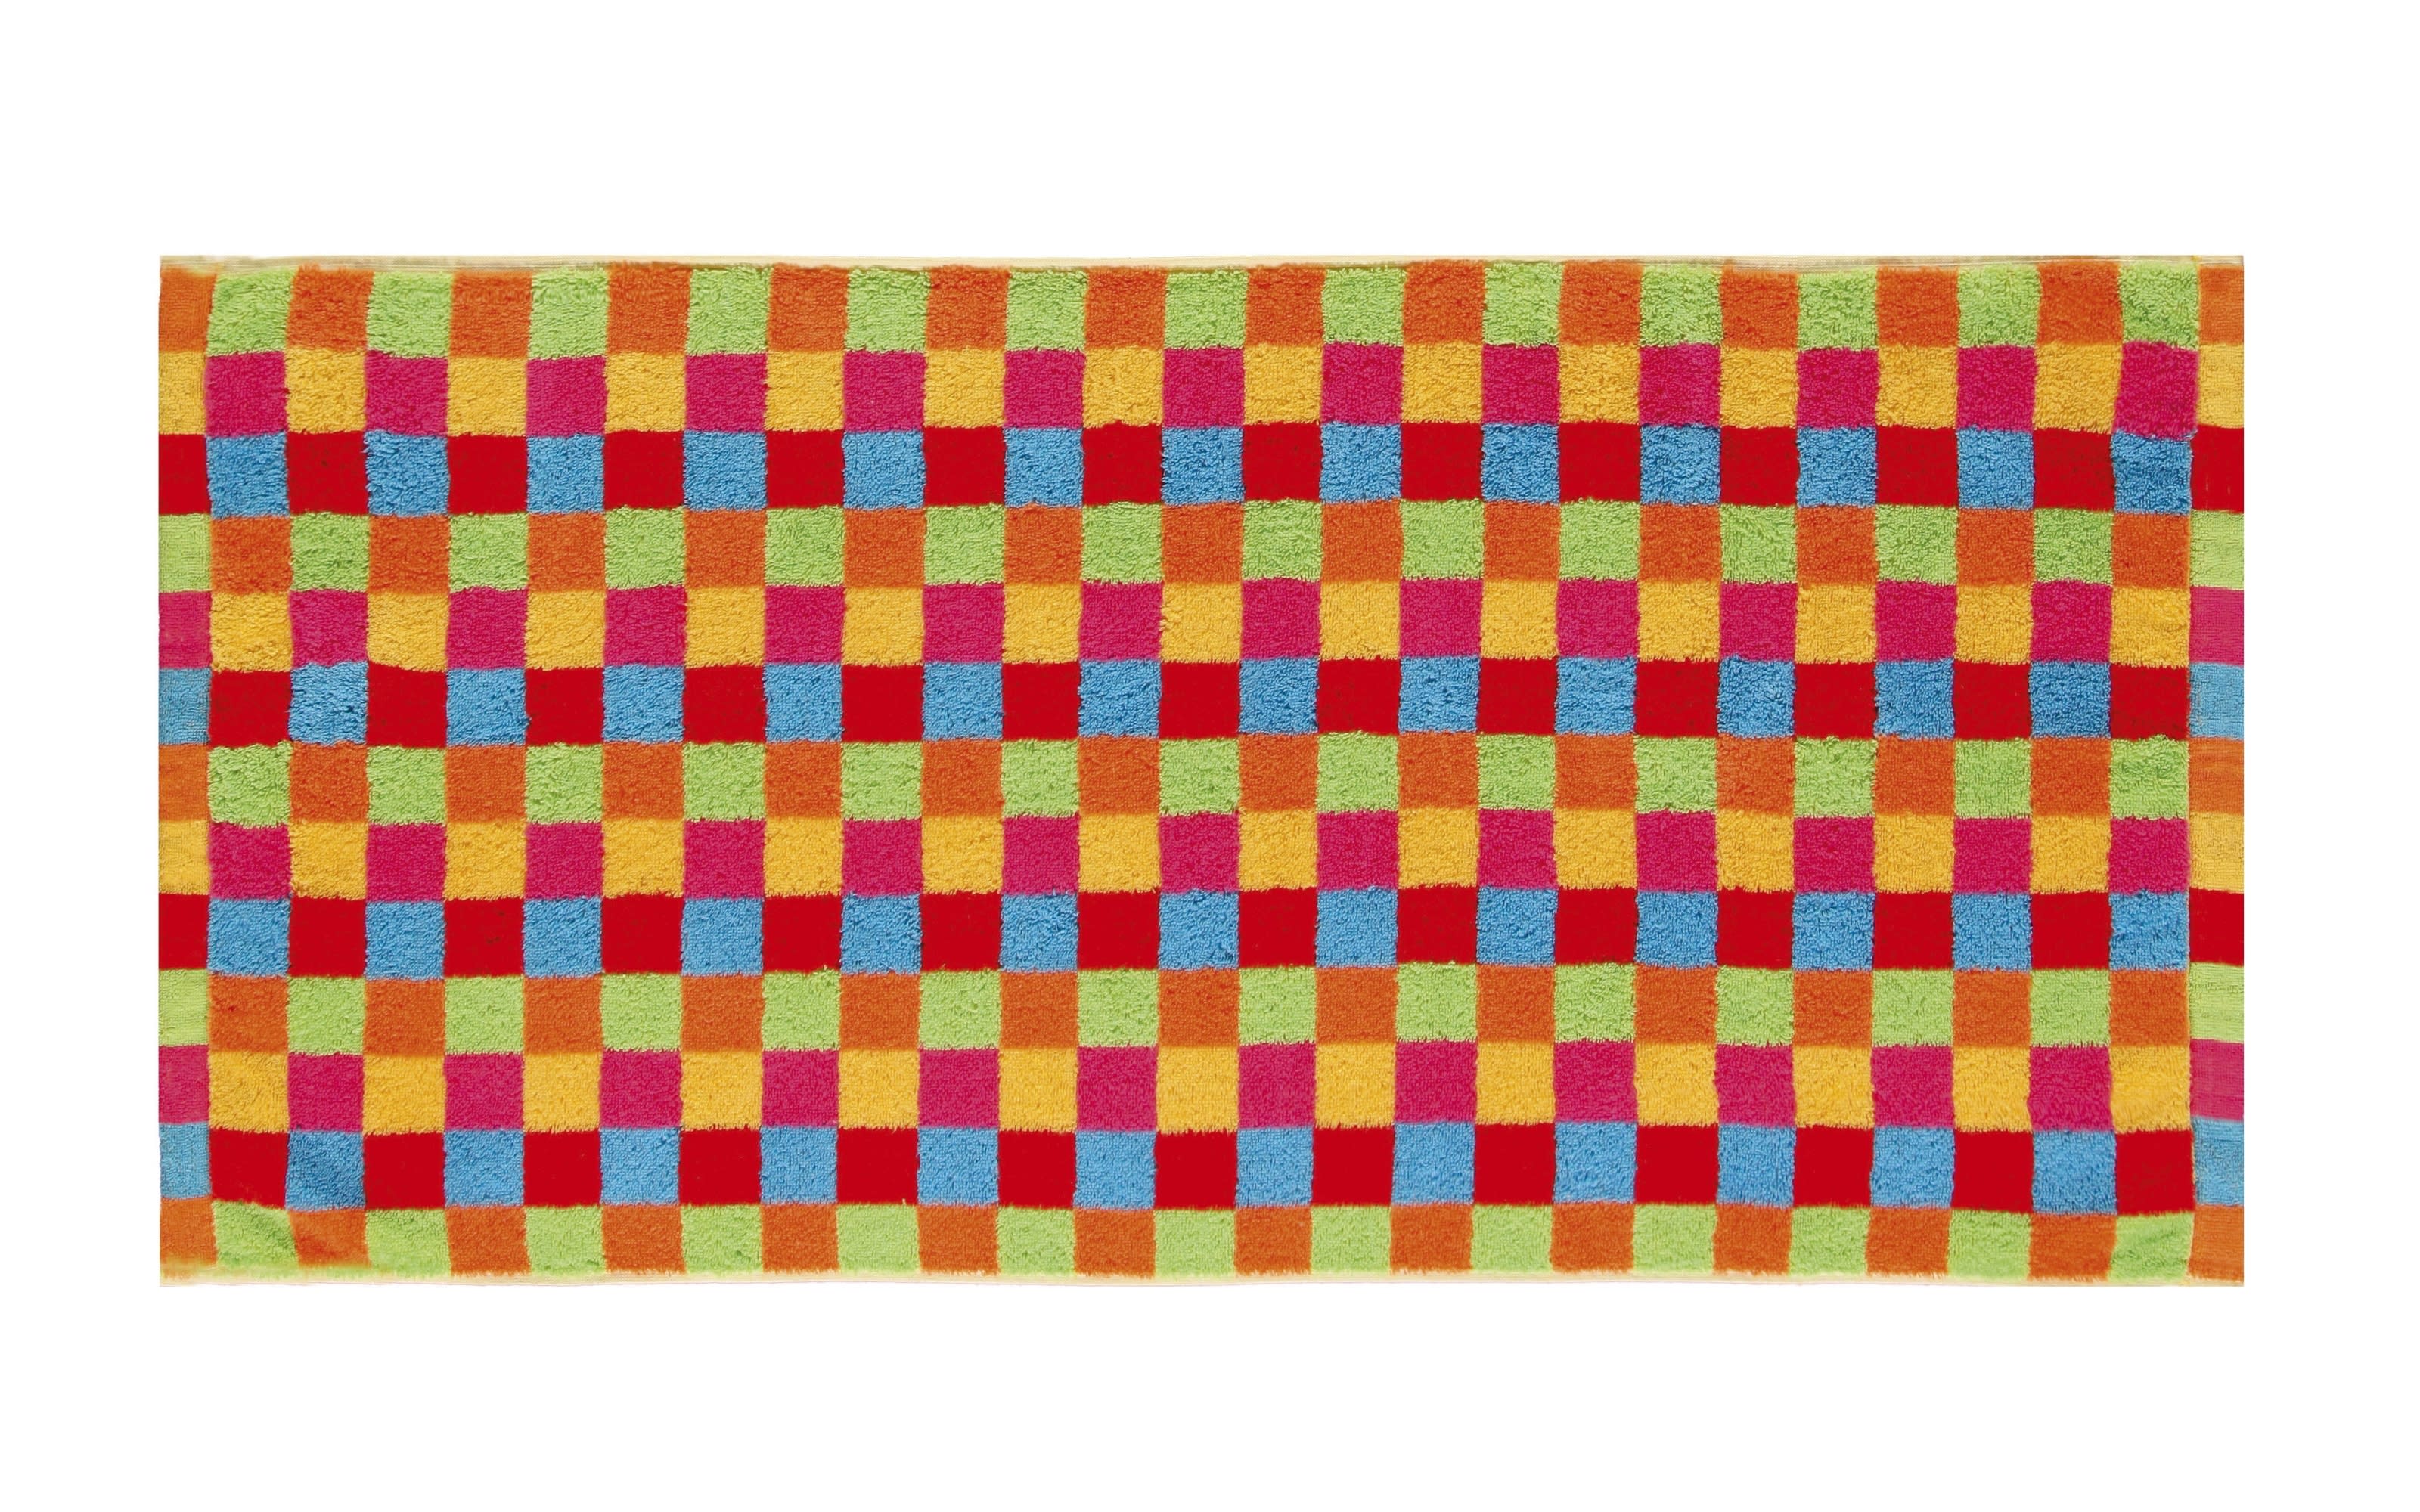 Saunatuch Lifestyle Karo, multicolor hell, 70 x 180 cm